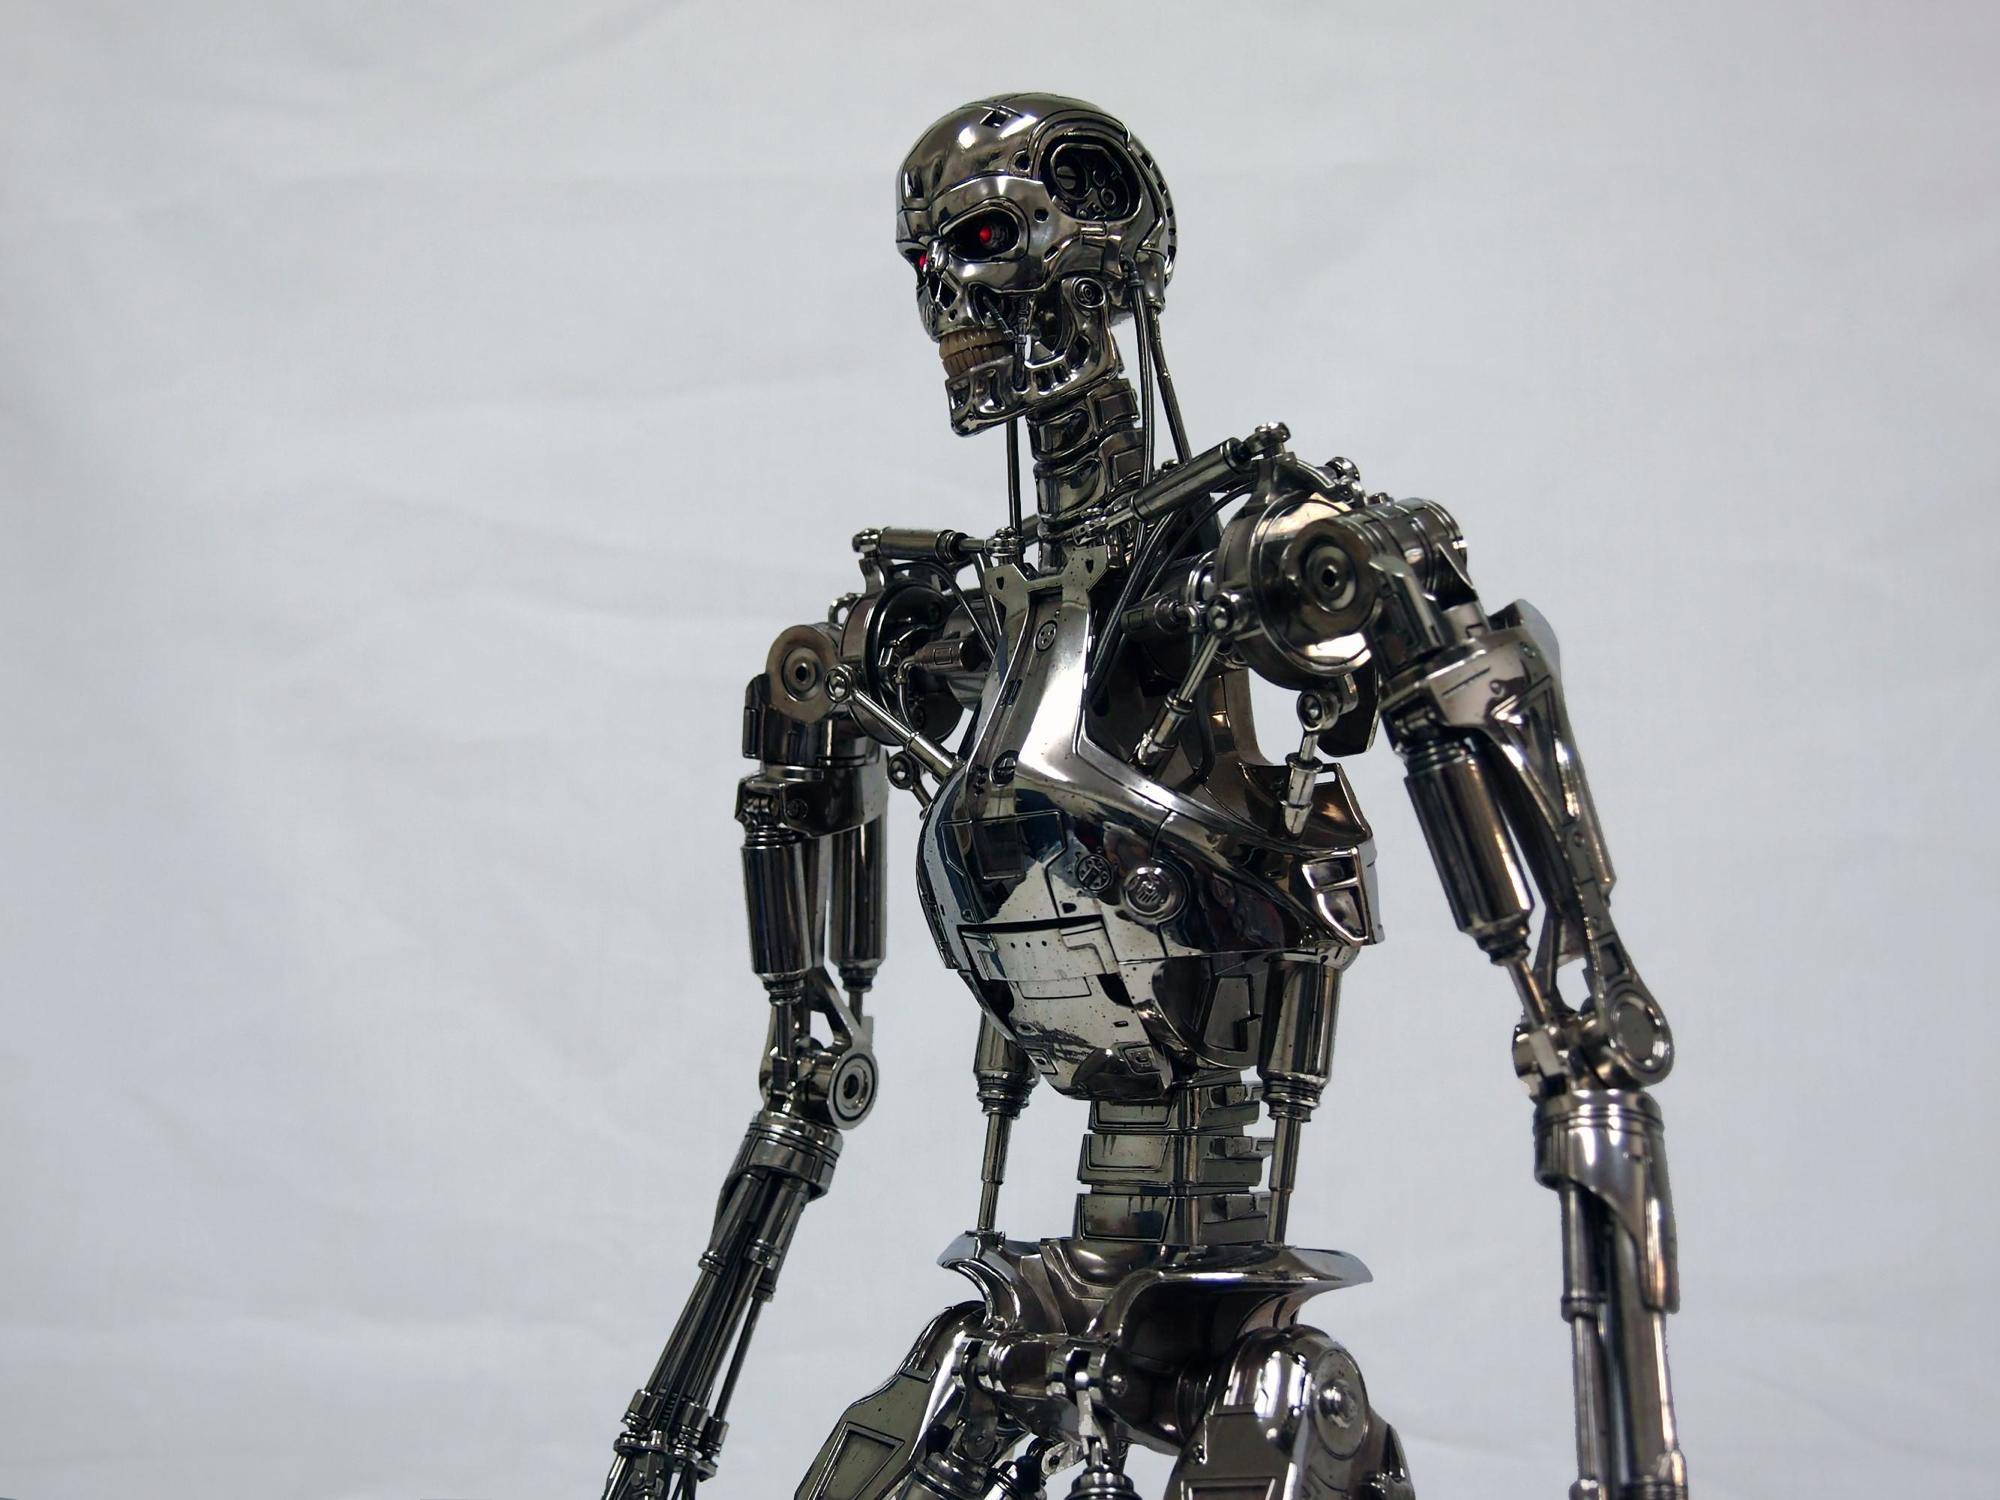 Terminator z790m. Терминатор 2 т 800 робот. Терминатор робот т 800. Т 800 эндоскелет. Терминатор т-800 эндоскелет.